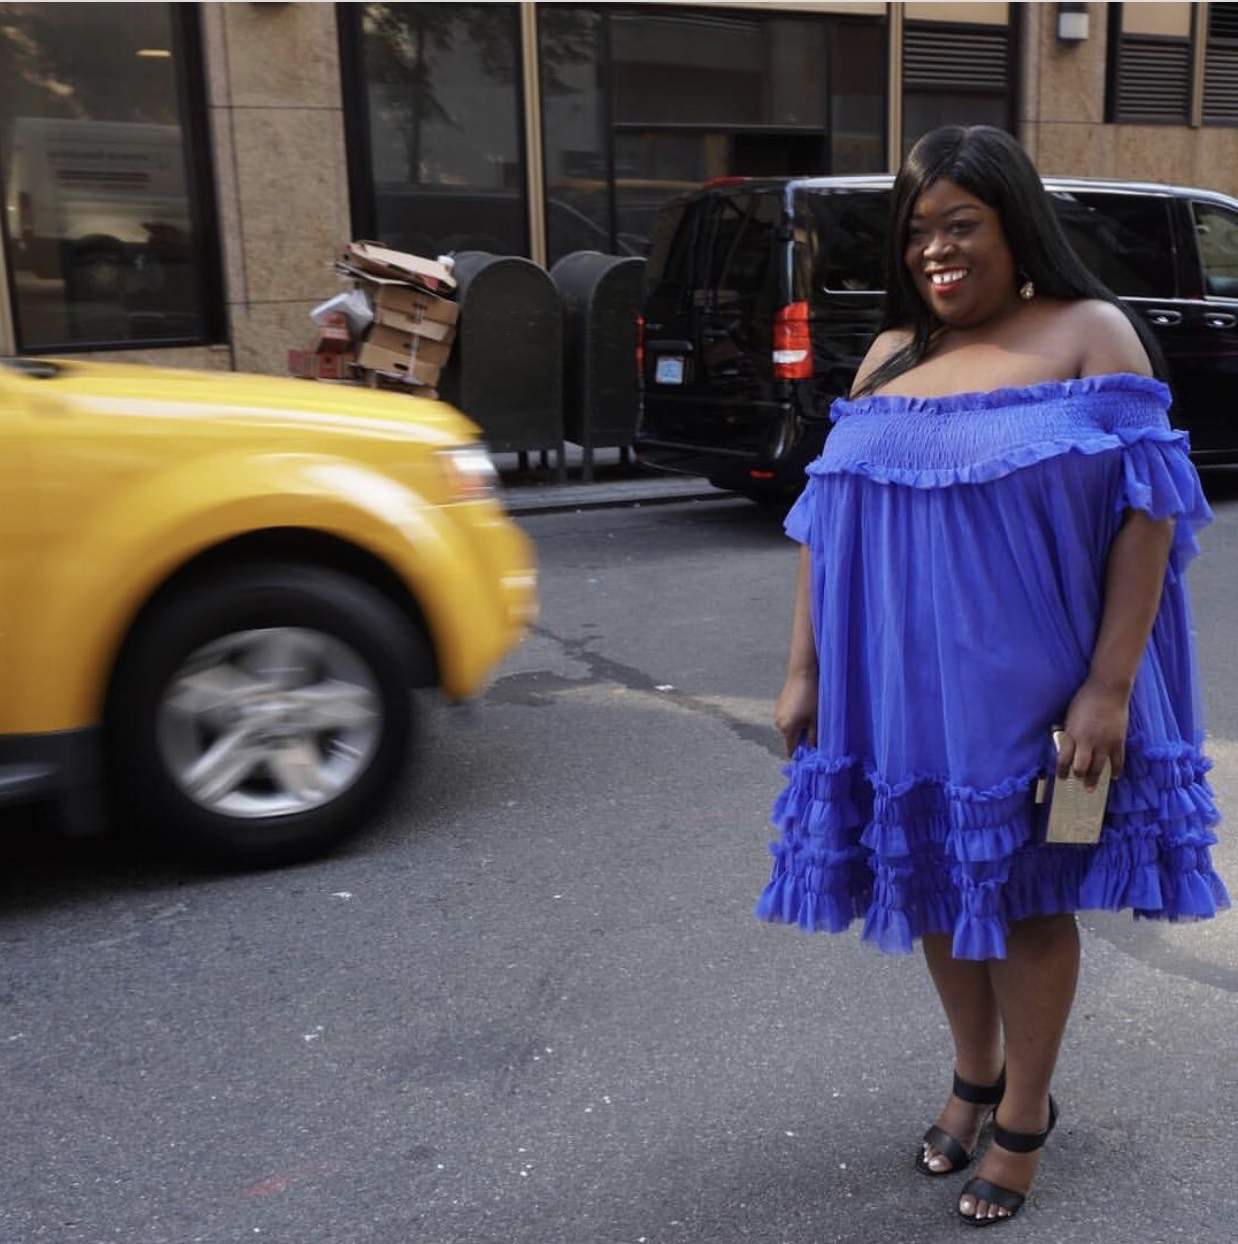 Plus size fashion blogger spotlight: The Fat Girl of Fashion